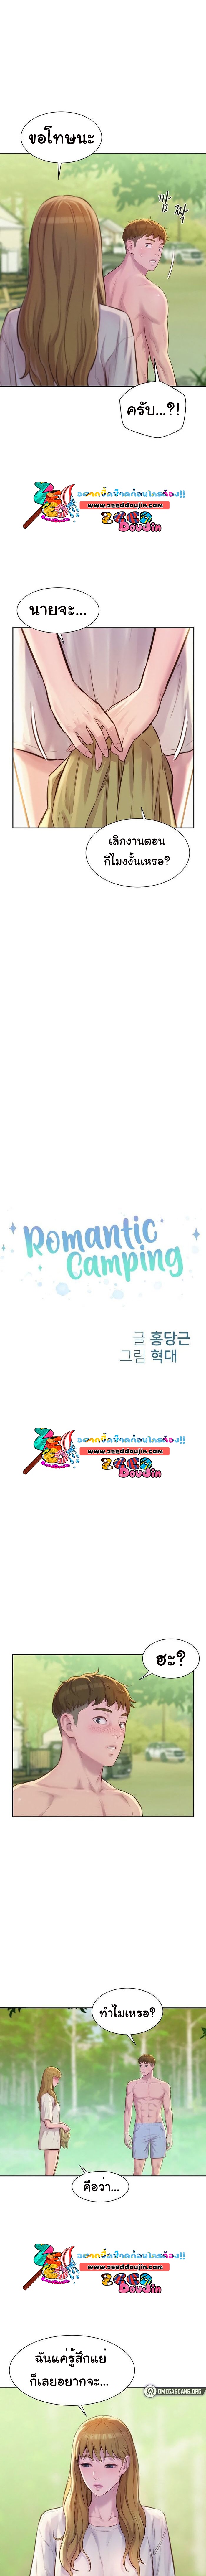 Romantic Camping 9 (1)